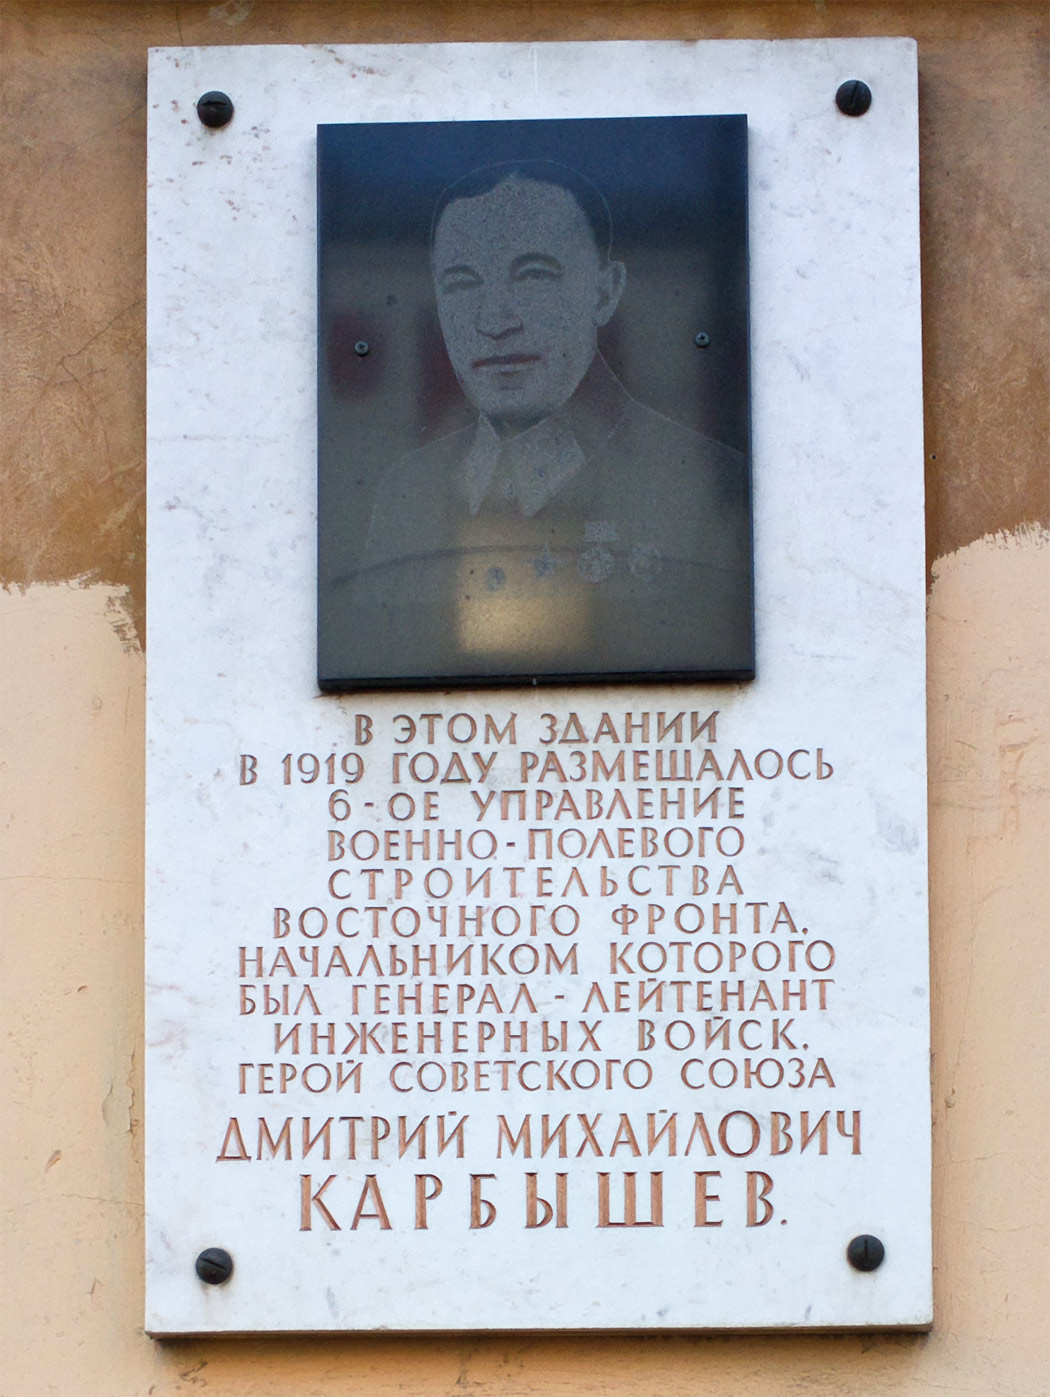 Samara, Галактионовская улица, 22 / Улица Венцека, 67. Samara — Memorial plaques